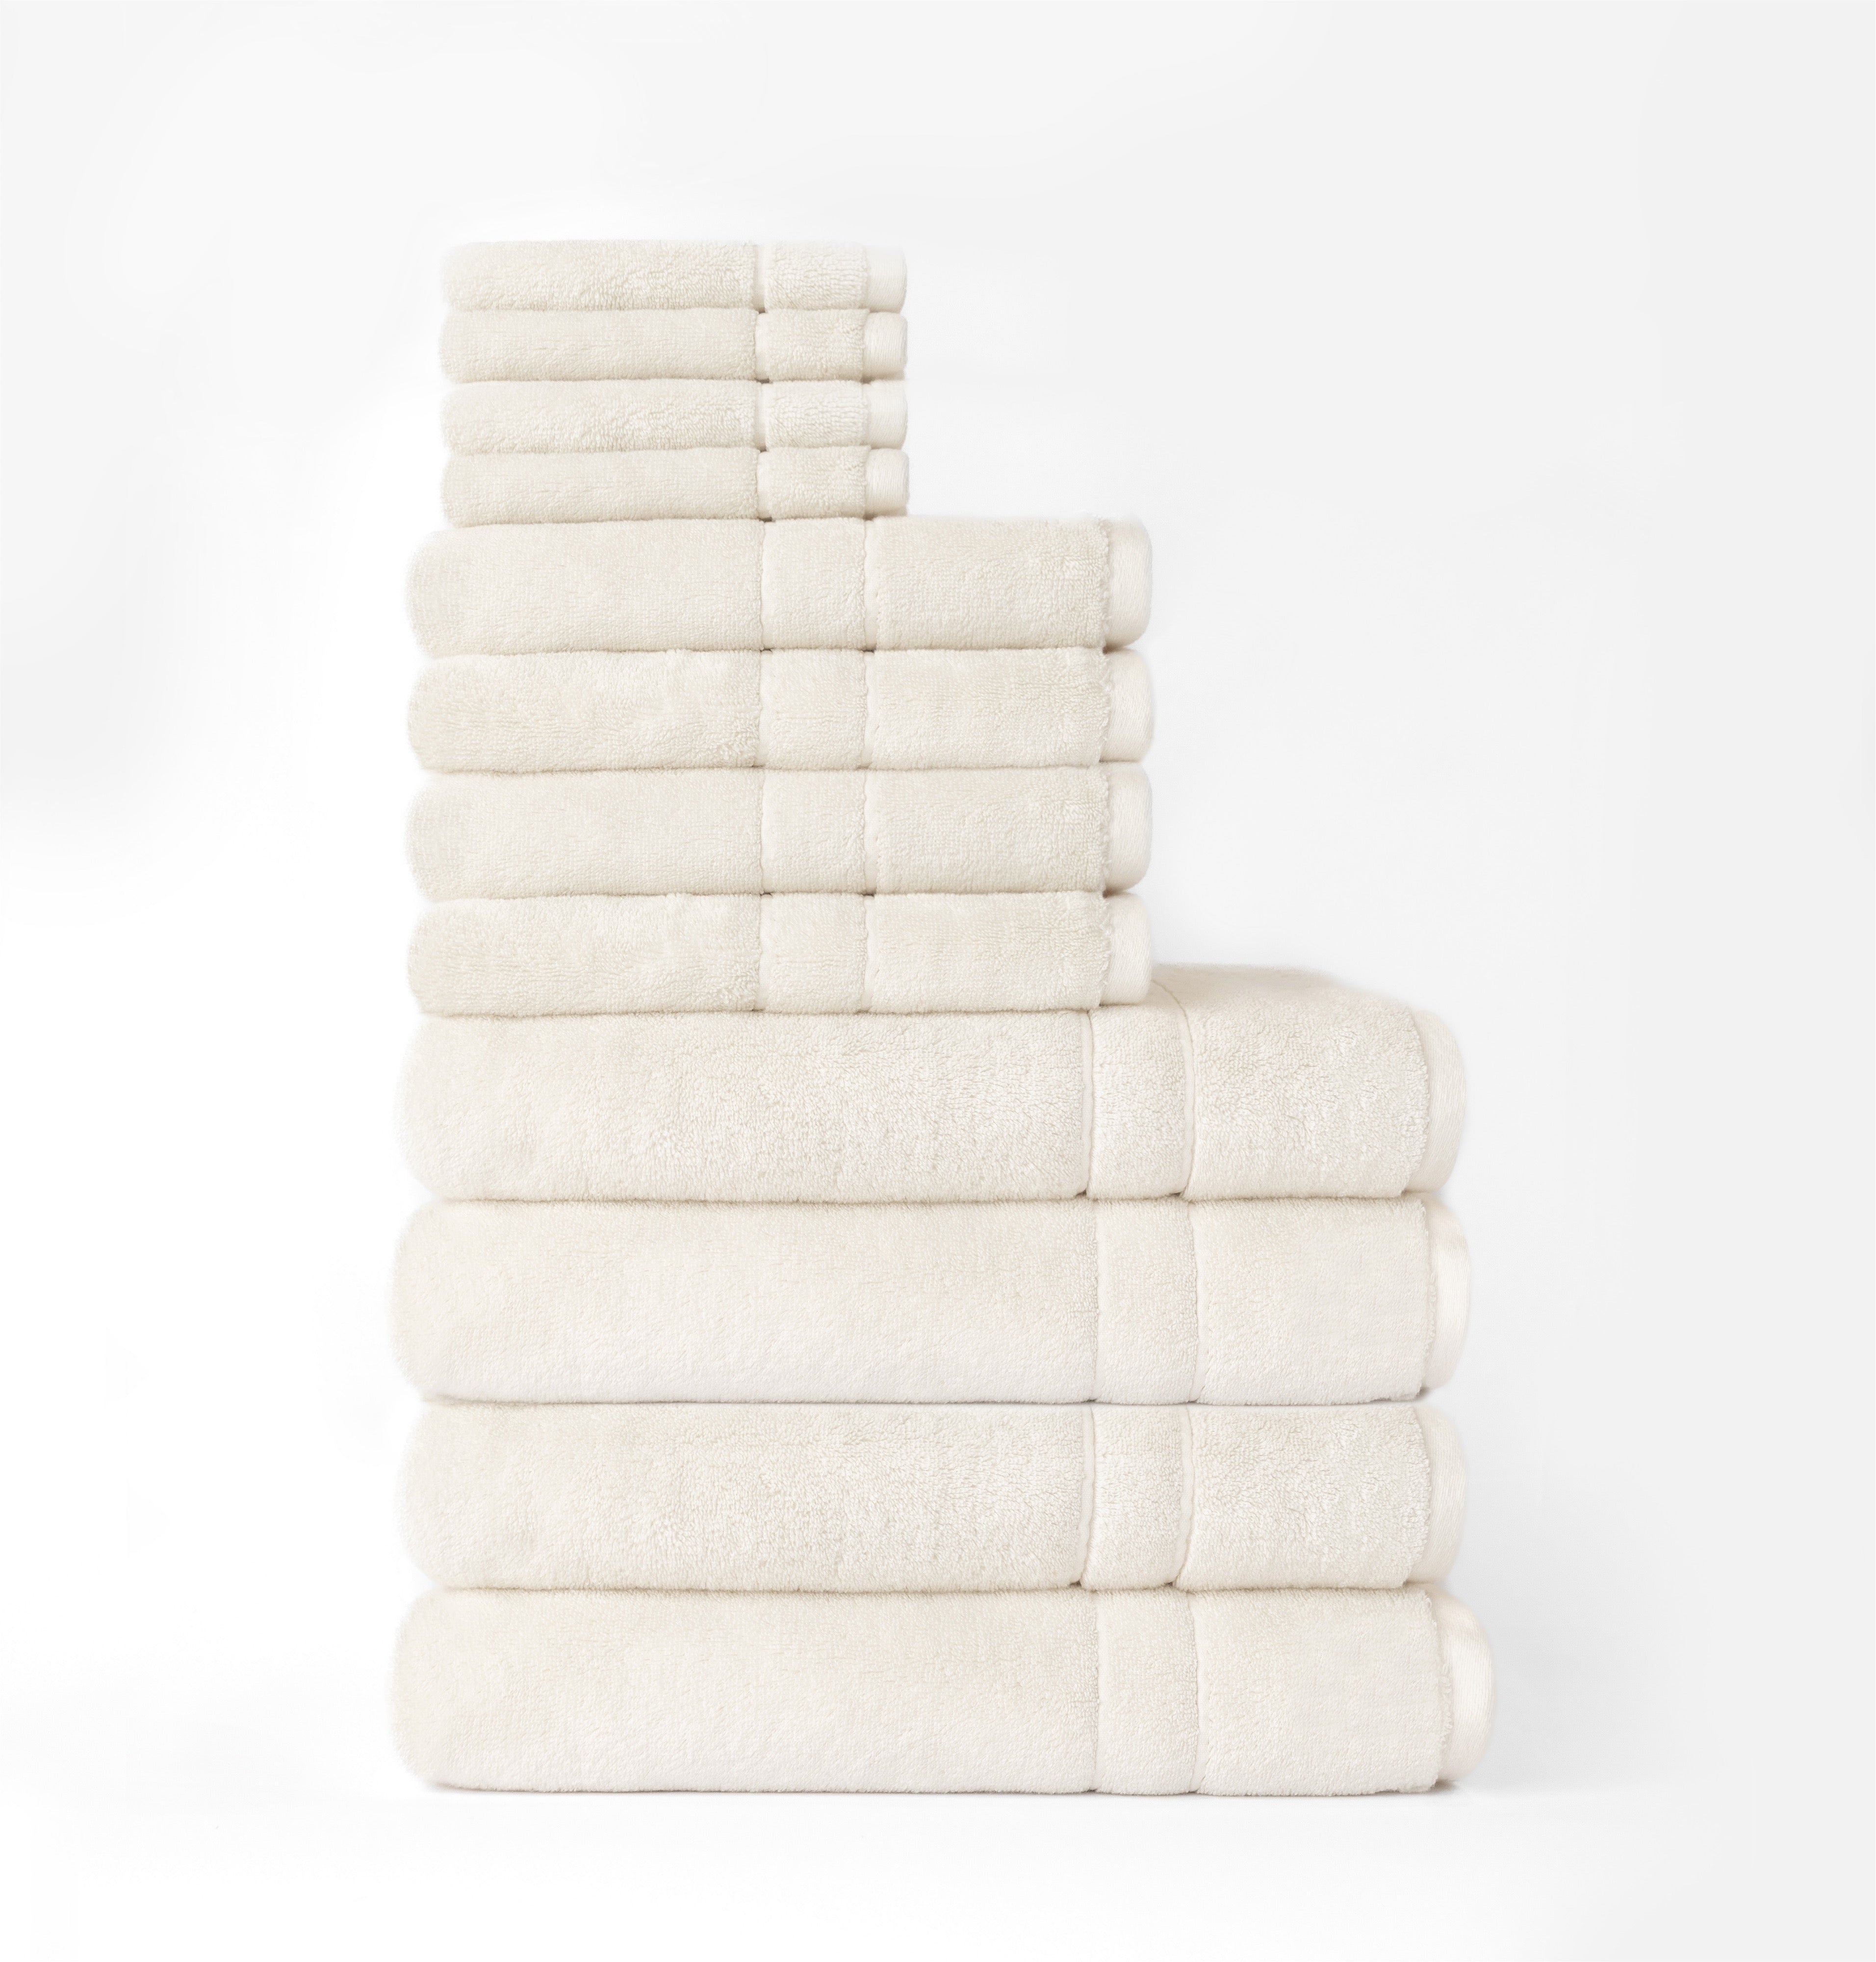 Premium Plush Bath Towels in the color Seashell. Photo of Complete Premium Plush Bath Bundle taken with white background |Color:Seashell